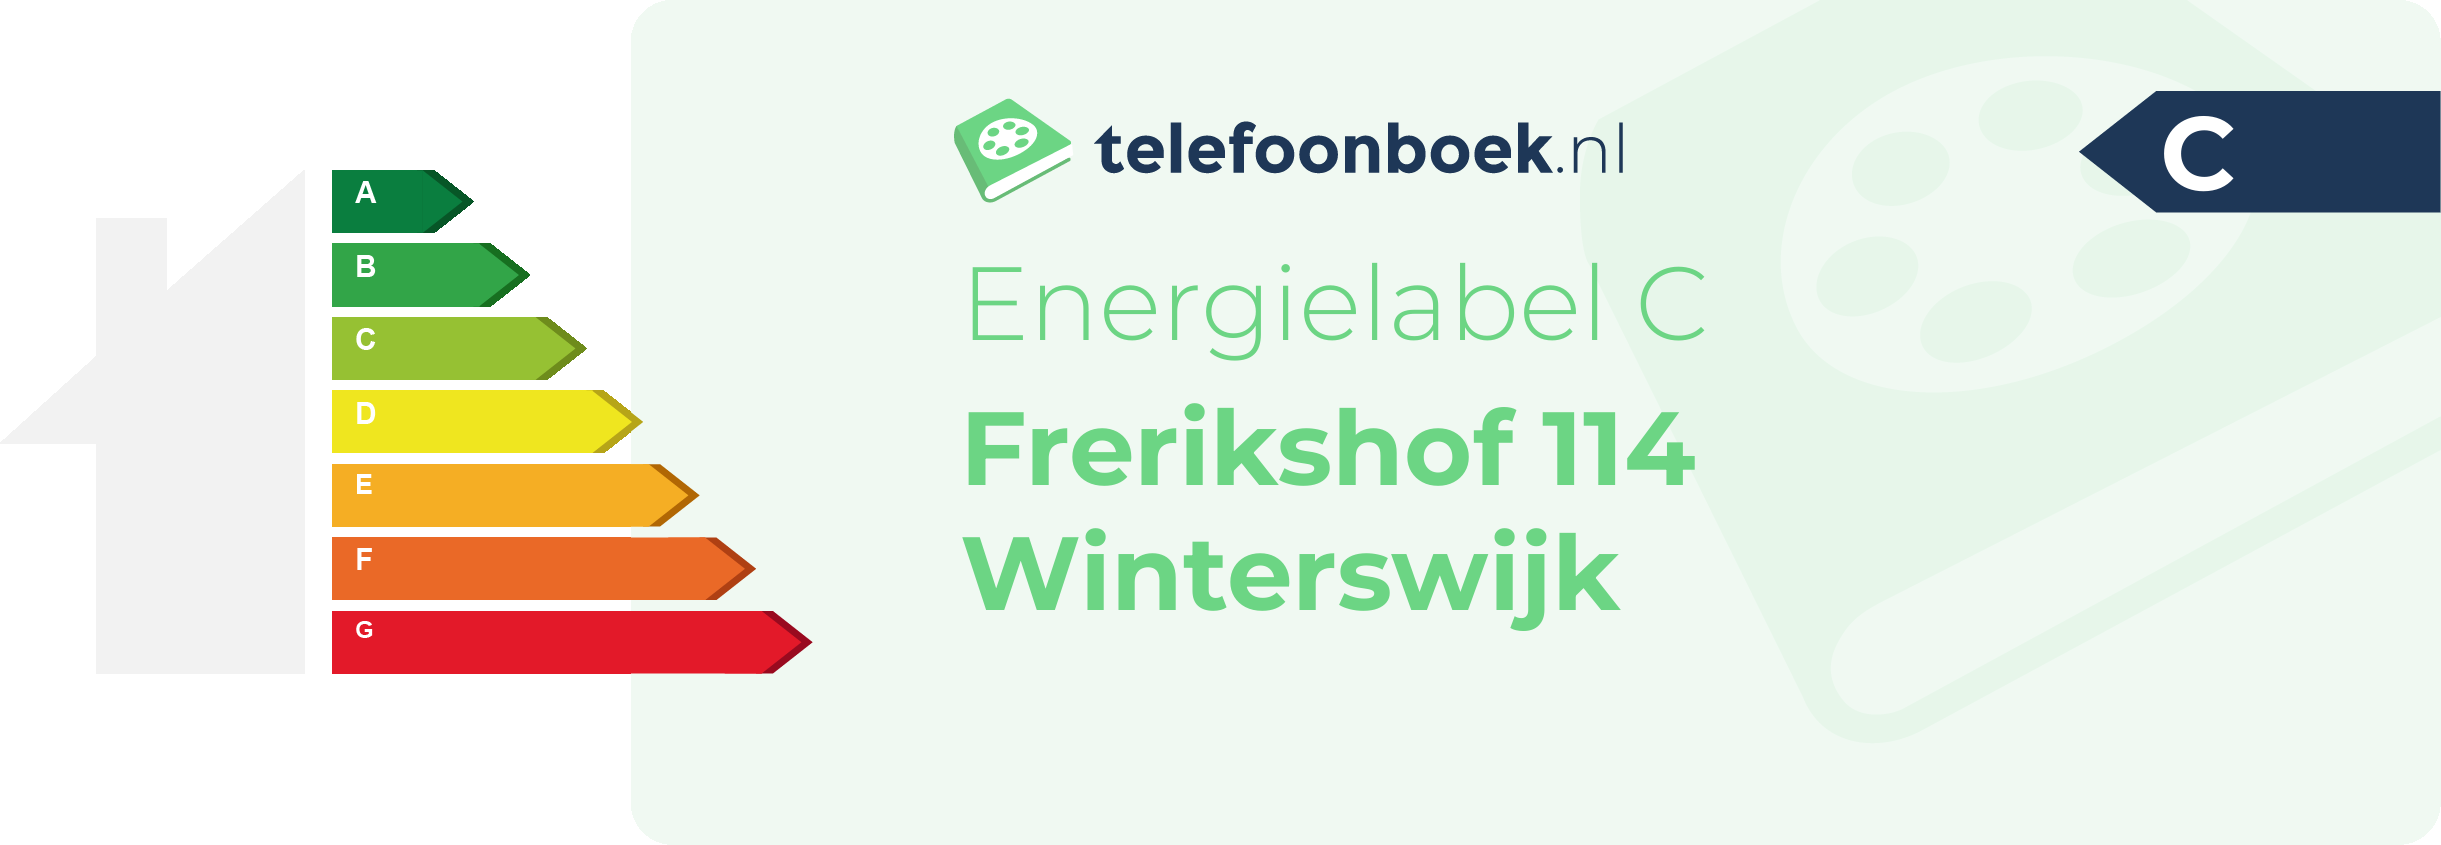 Energielabel Frerikshof 114 Winterswijk